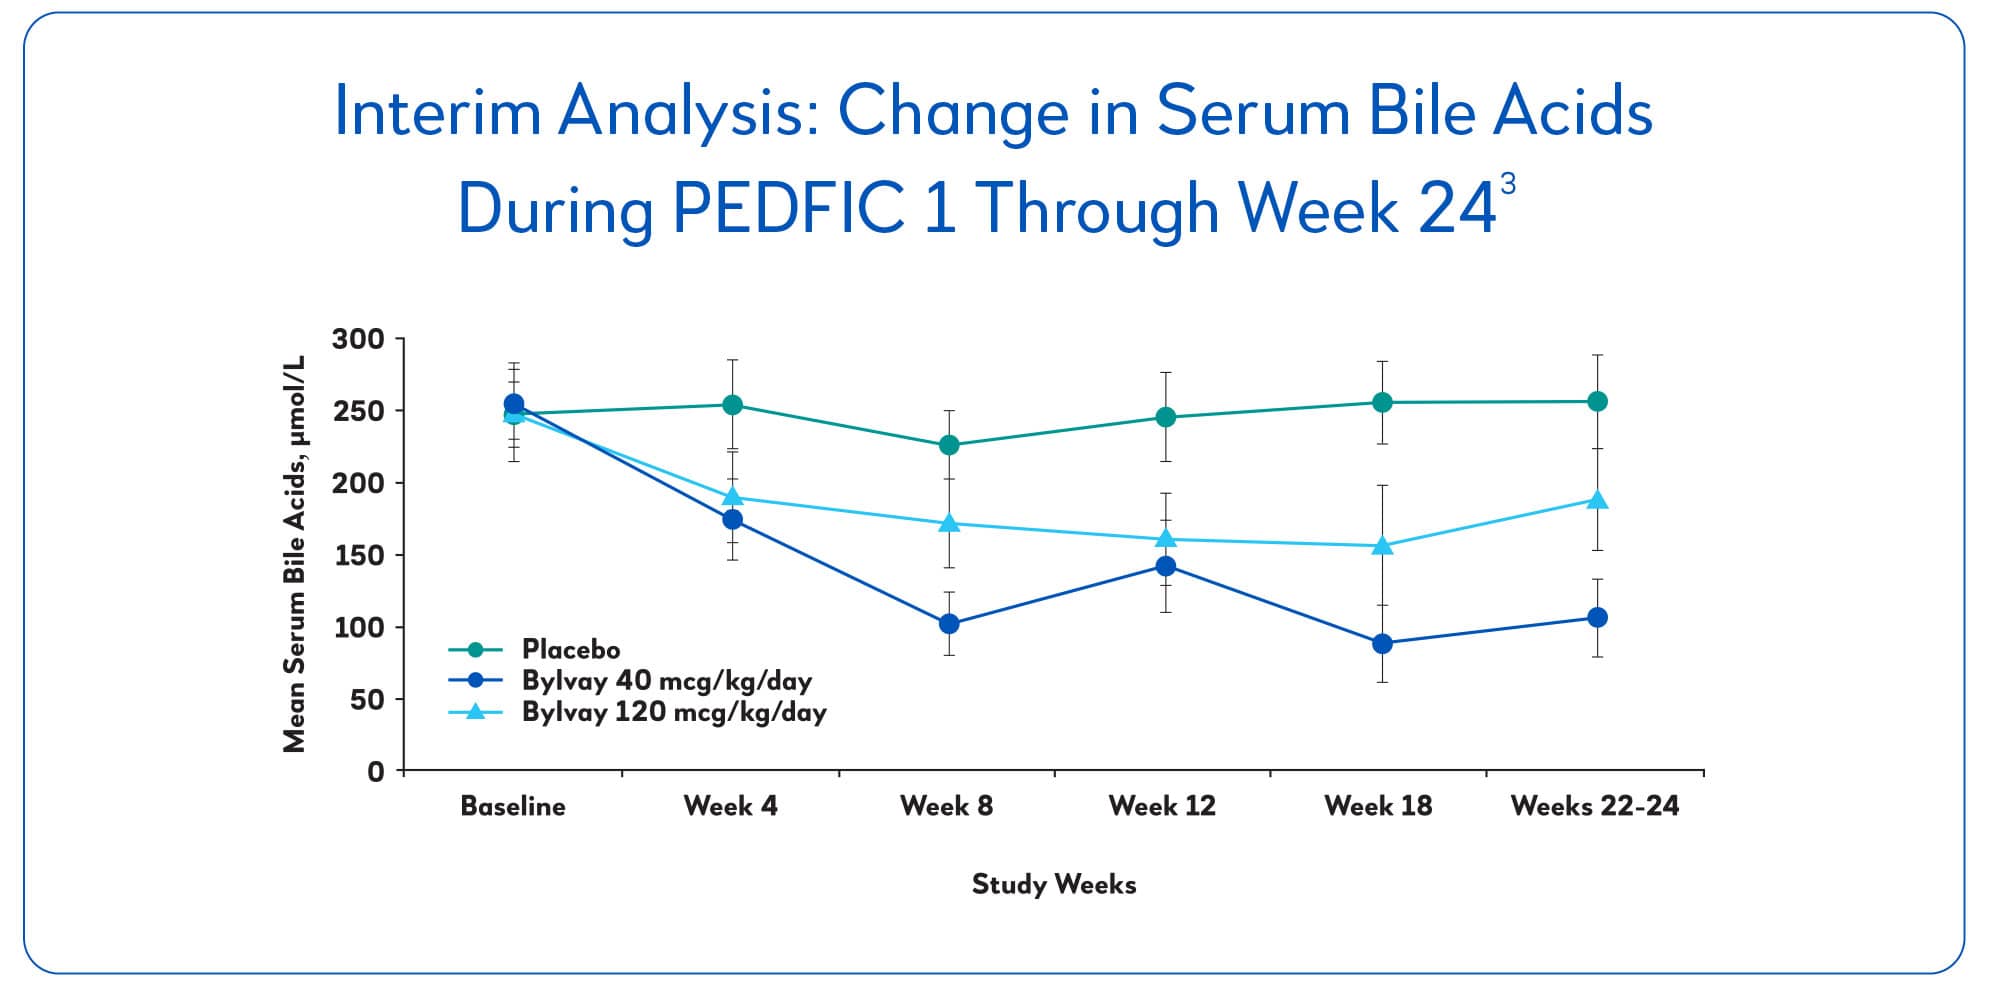 Line graph titled, “Interim Analysis: Change in Serum Bile Acids During PEDFIC 1 Through Week 24,” showing improvement in sBA levels.